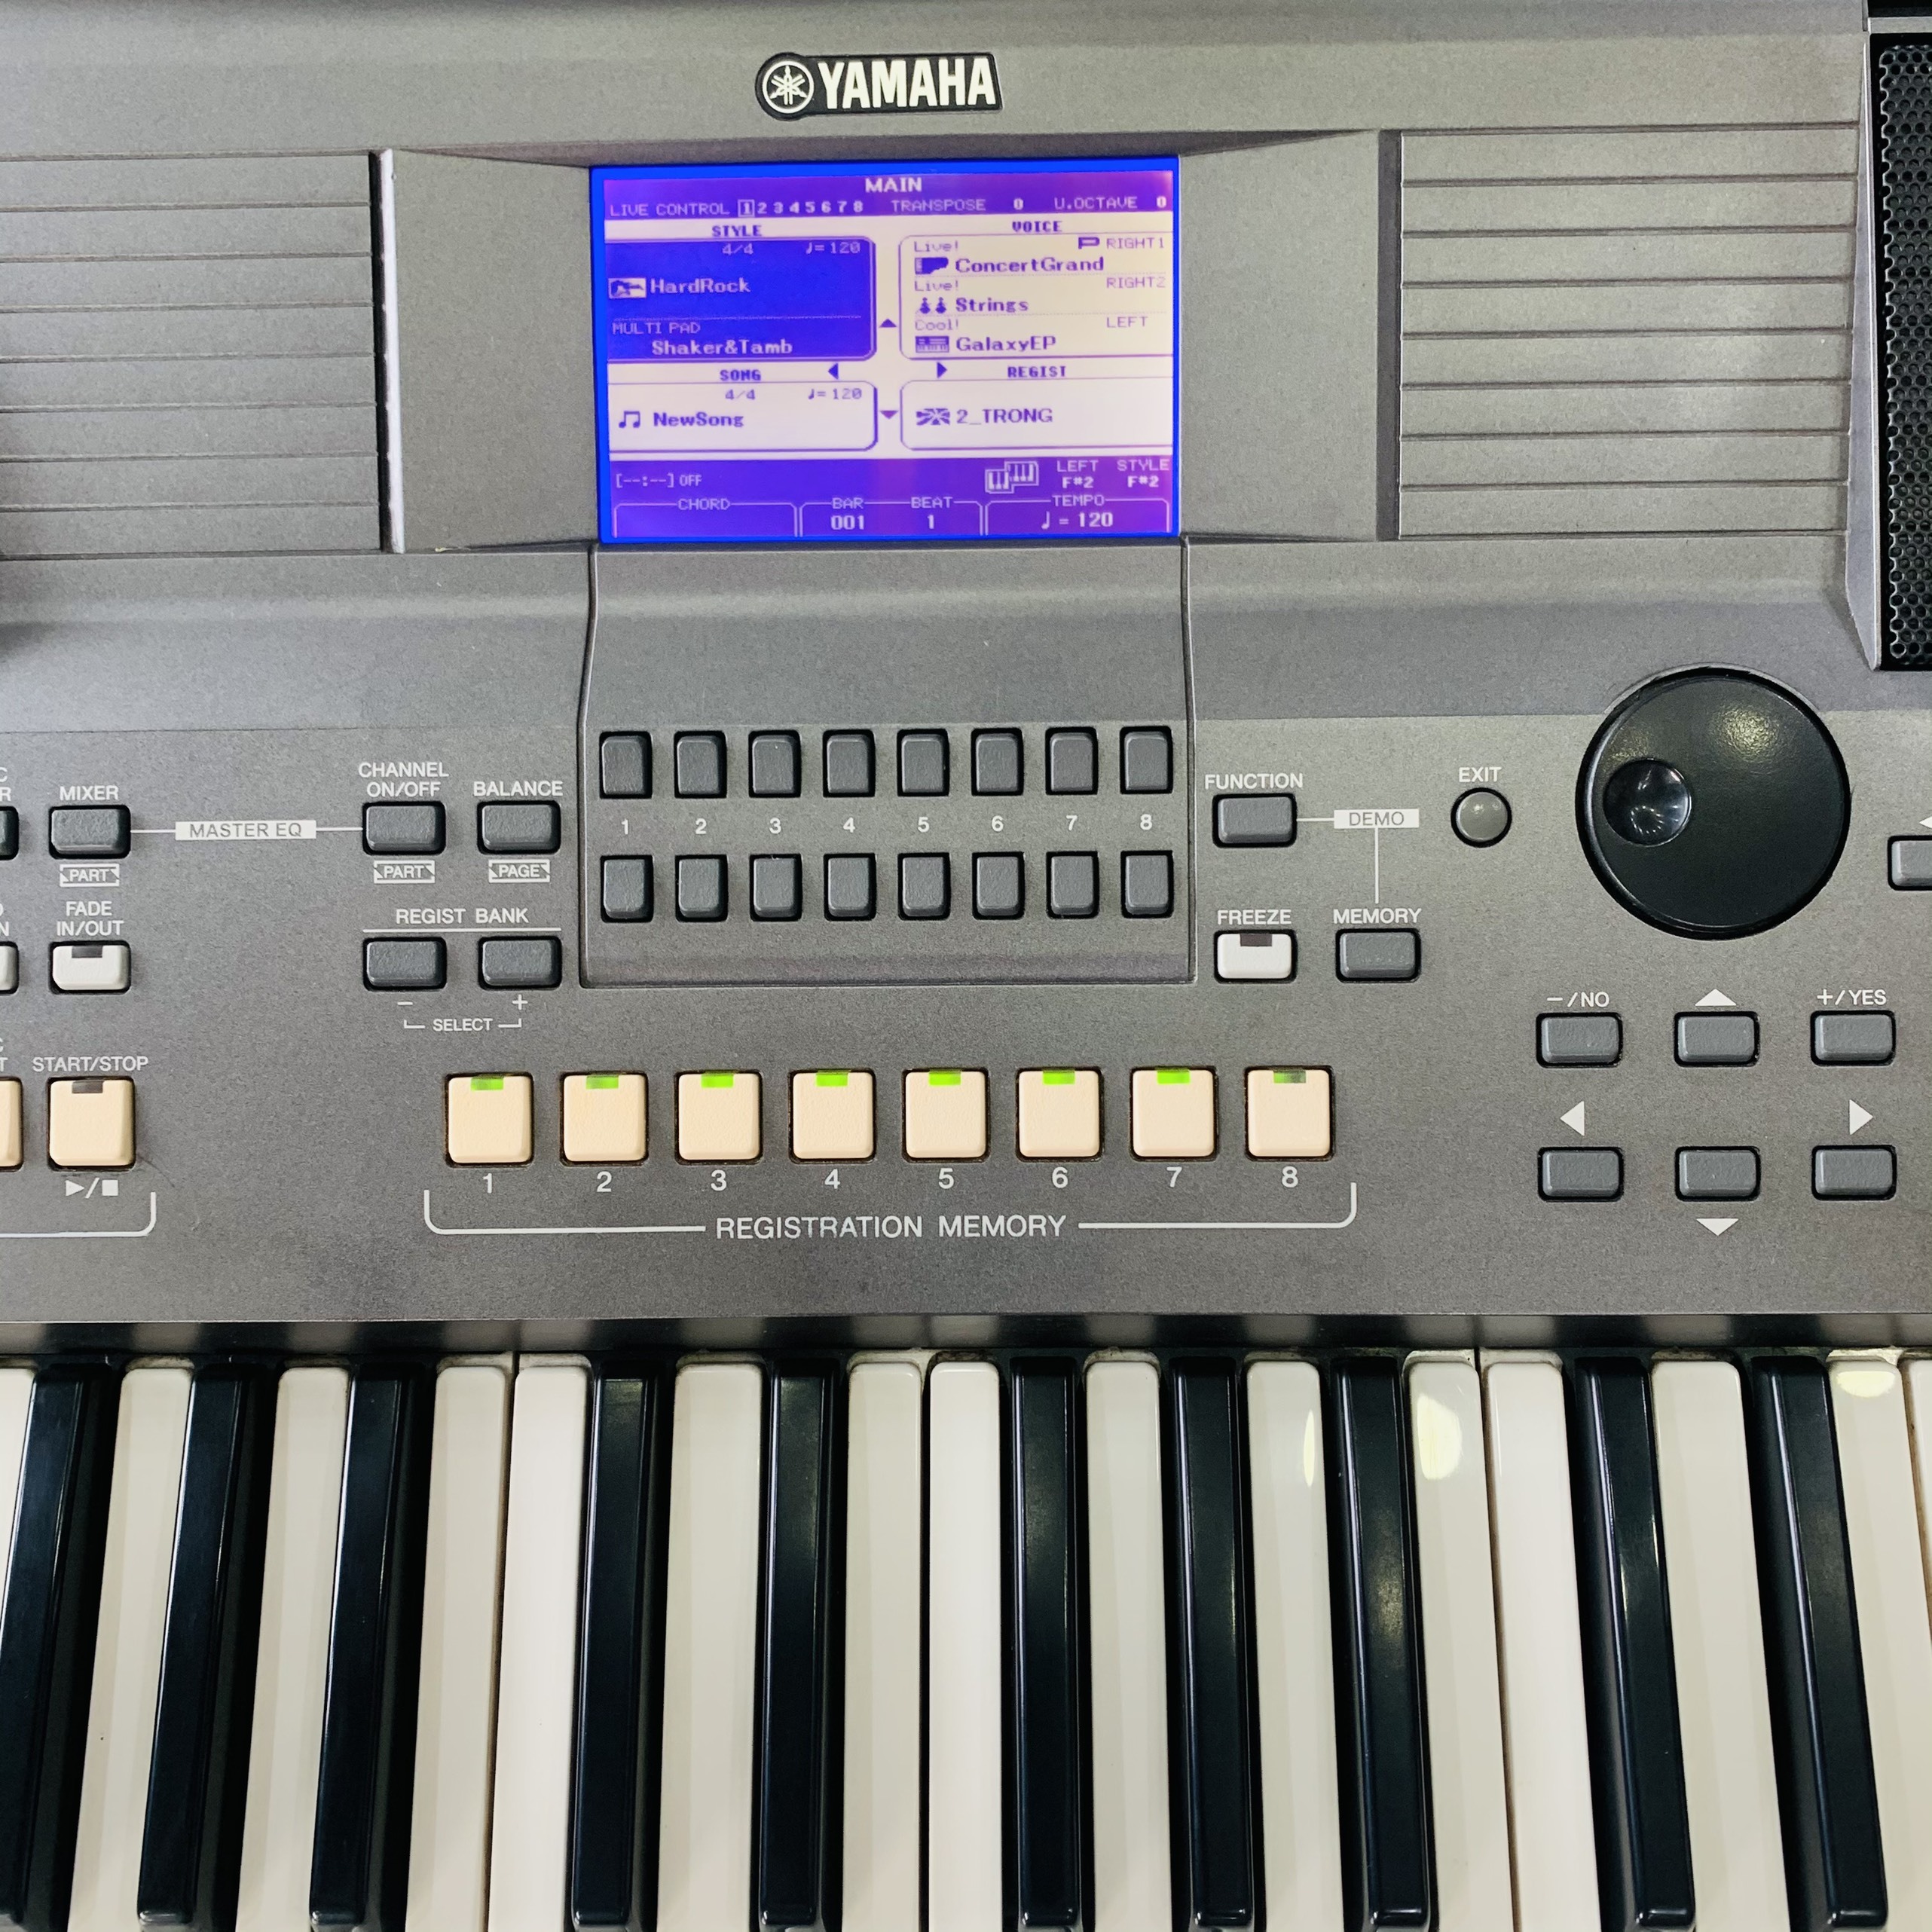 Đàn organ Yamaha PSR-S670